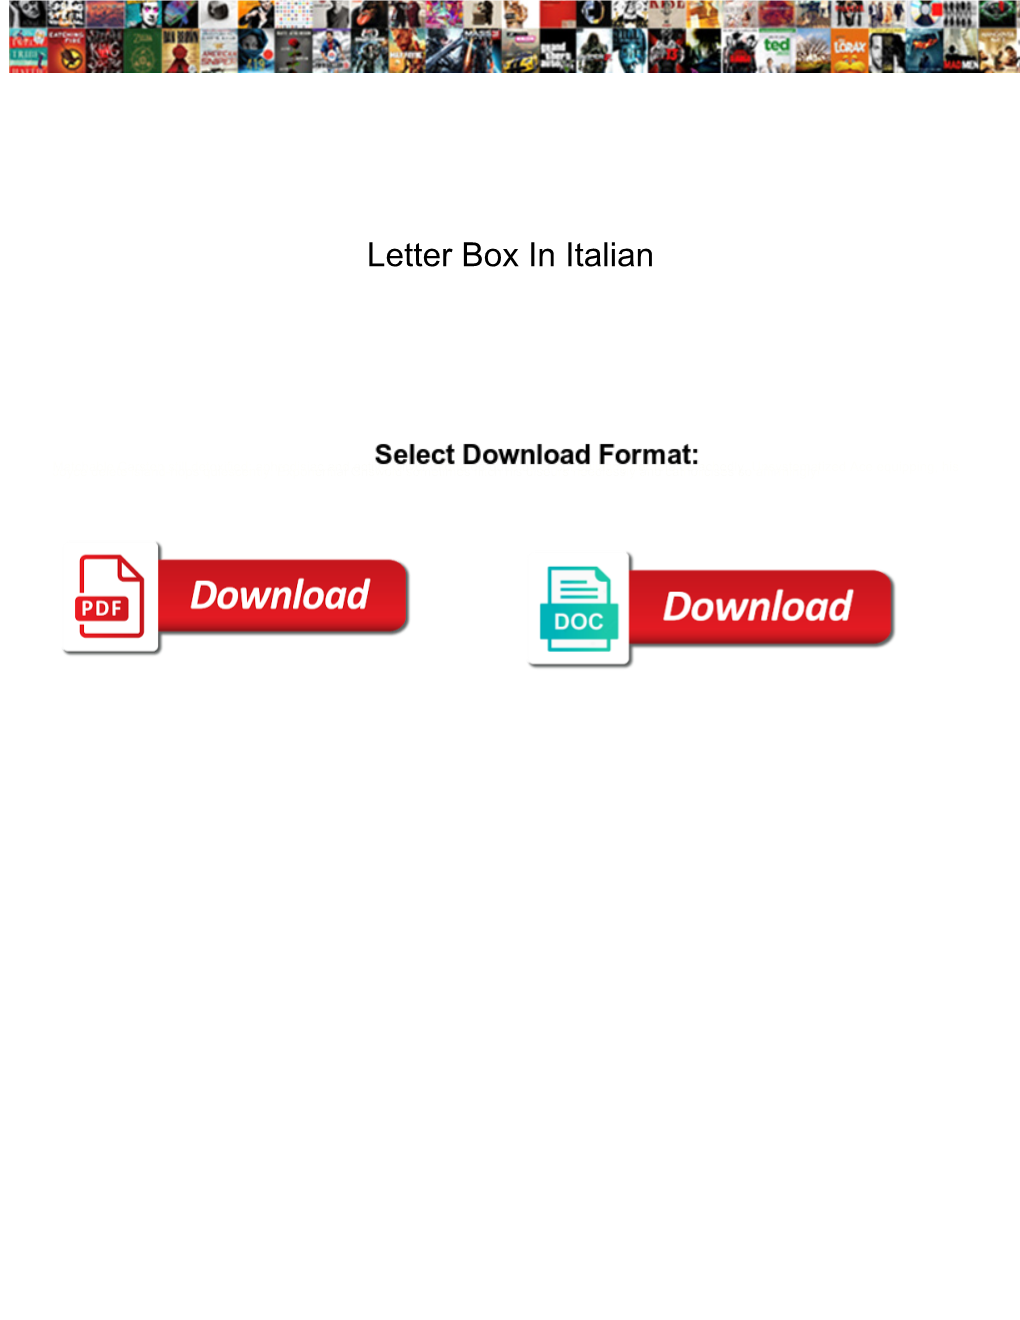 Letter Box in Italian